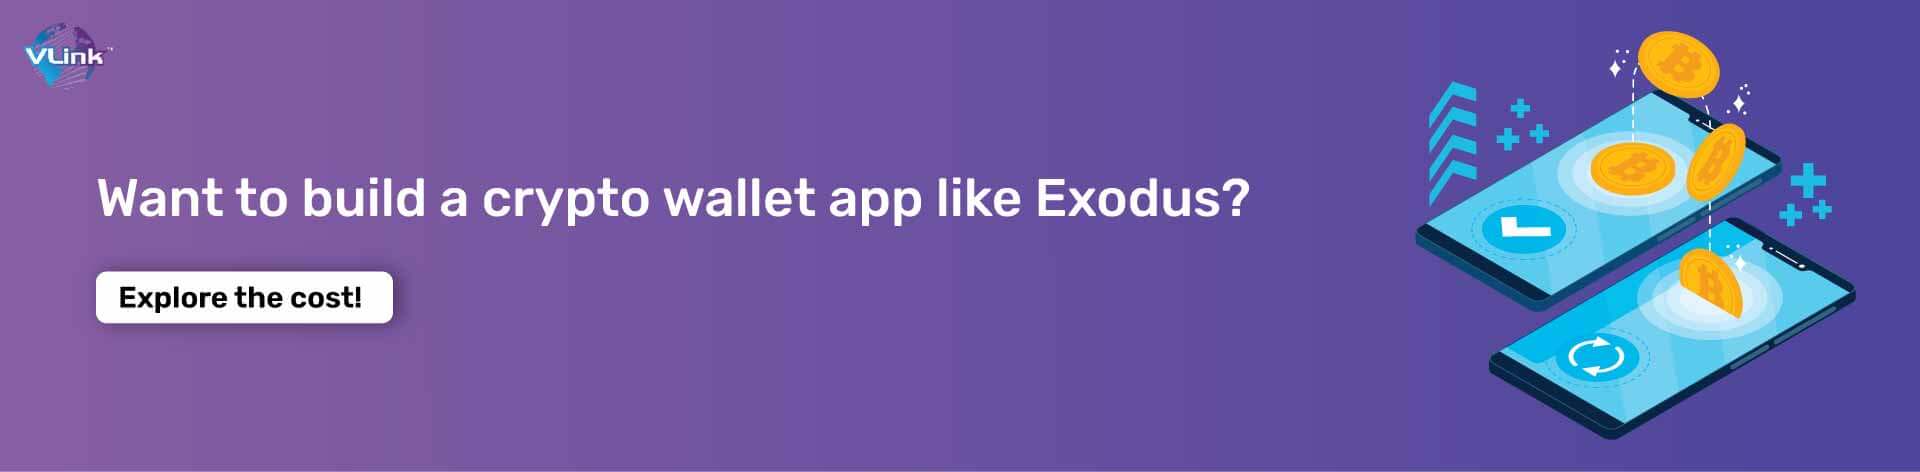 app-like-exodus-cryptocurrency-wallet-cta